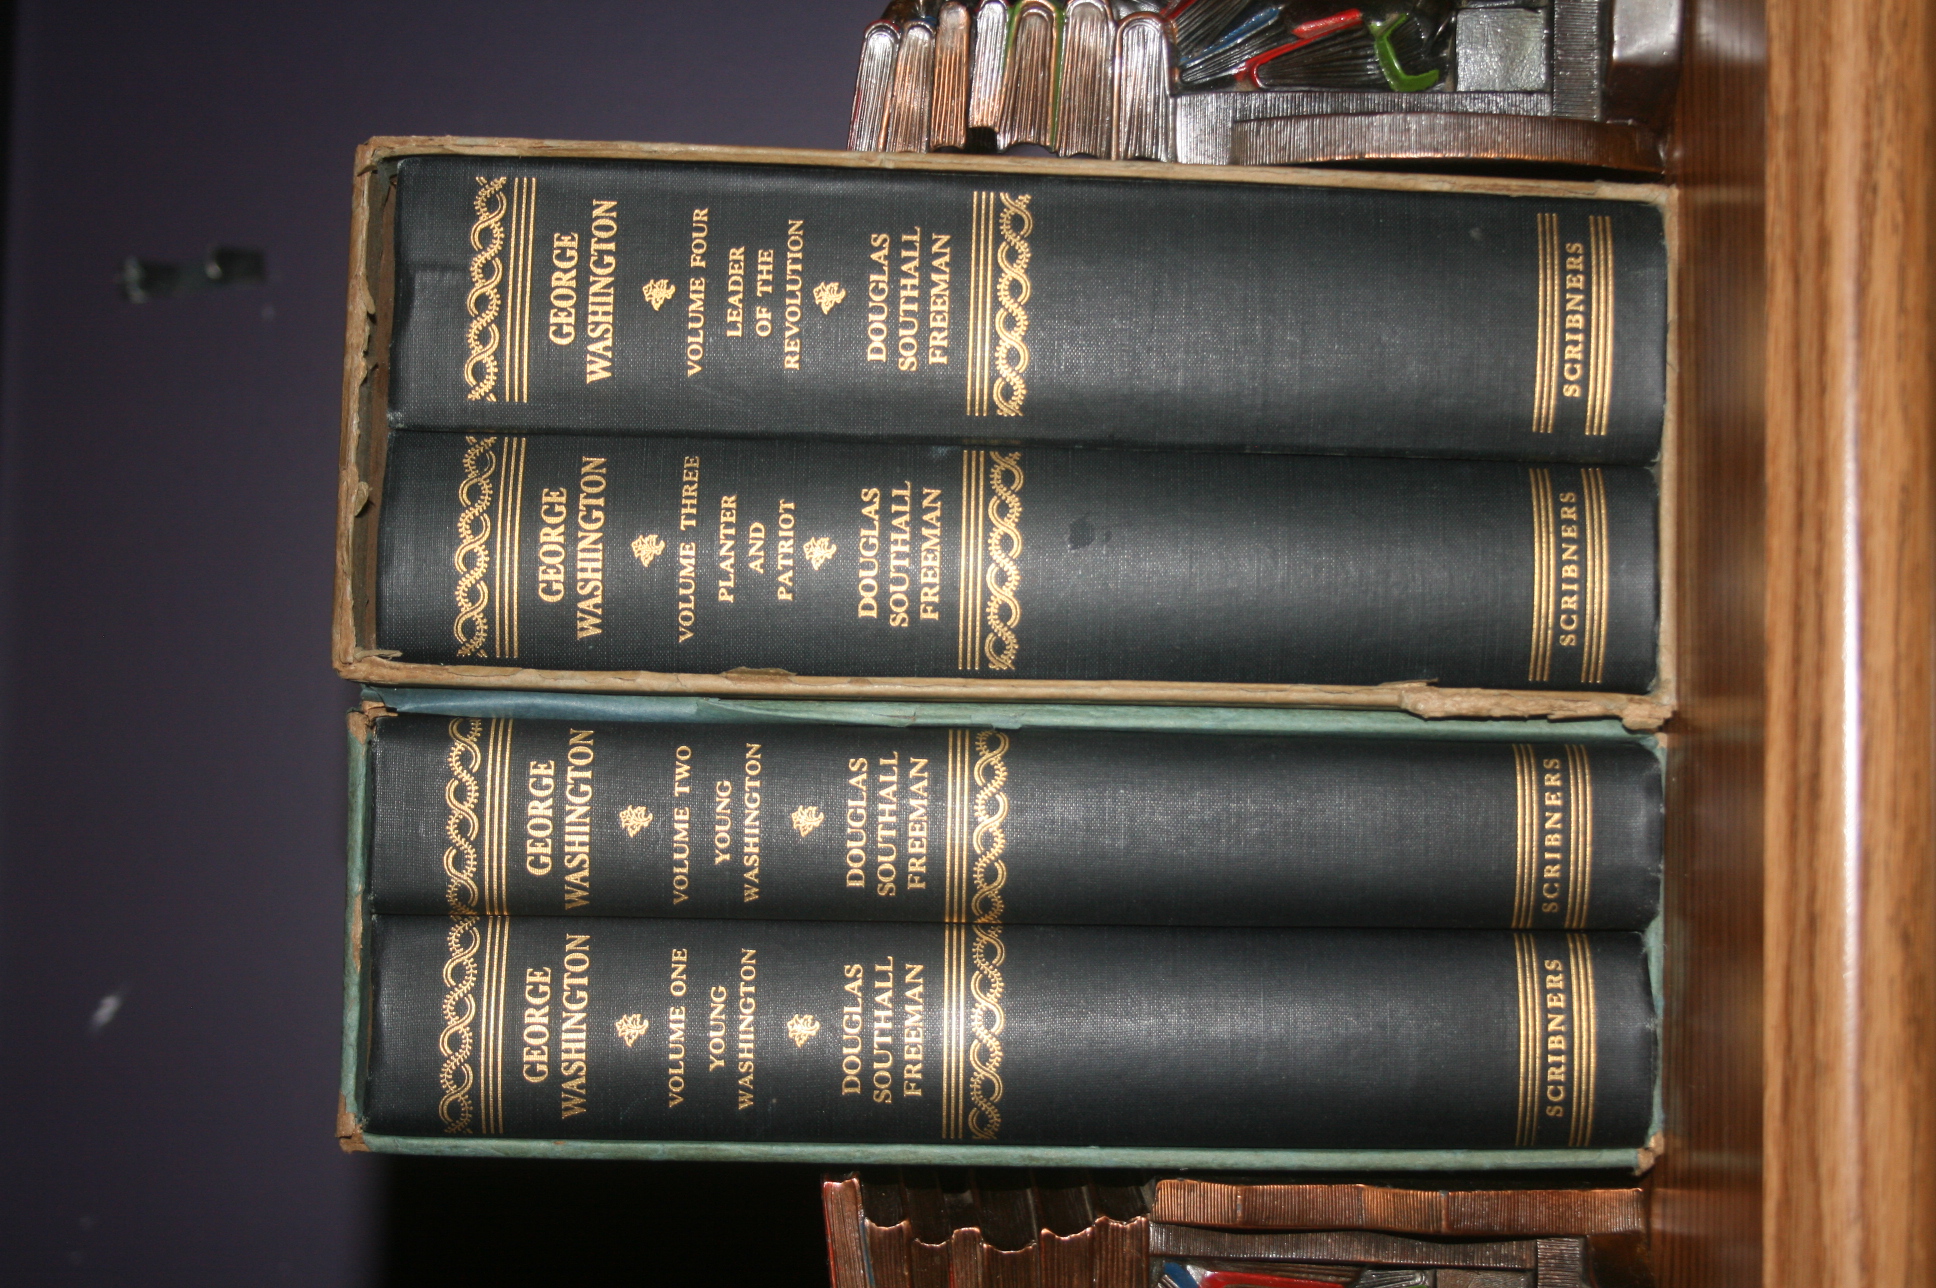 George Washington - A Biography - Volumes 1,2,3,4